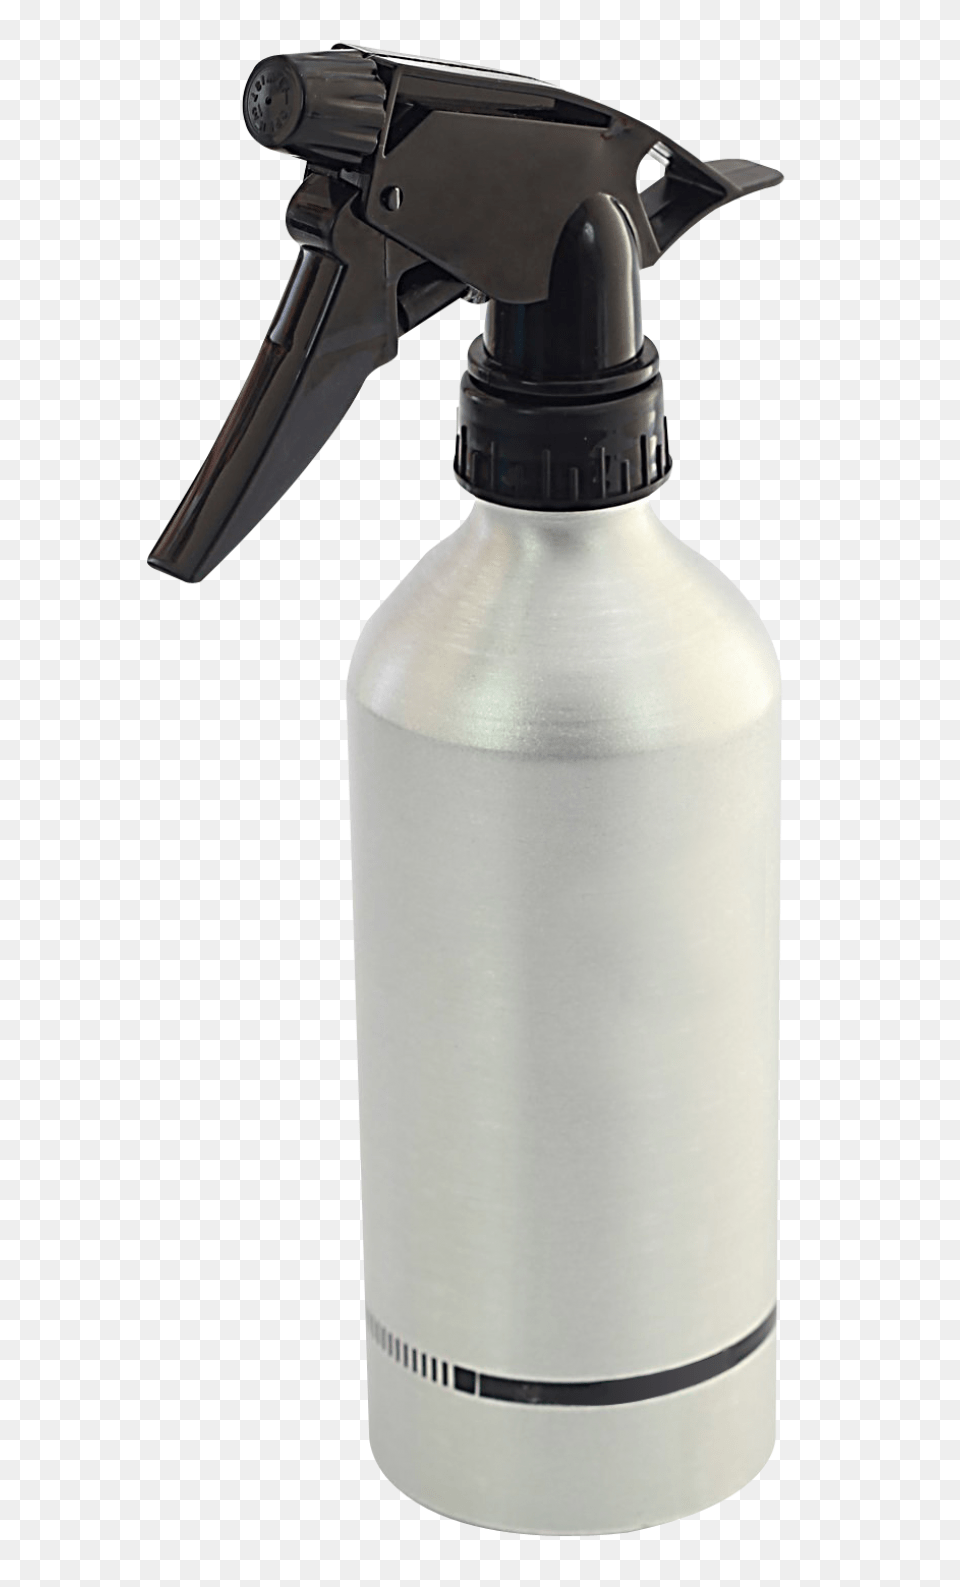 Water Bottle Aquafina Transparent Image Pngpix Spray Bottle, Can, Spray Can, Tin, Shaker Png